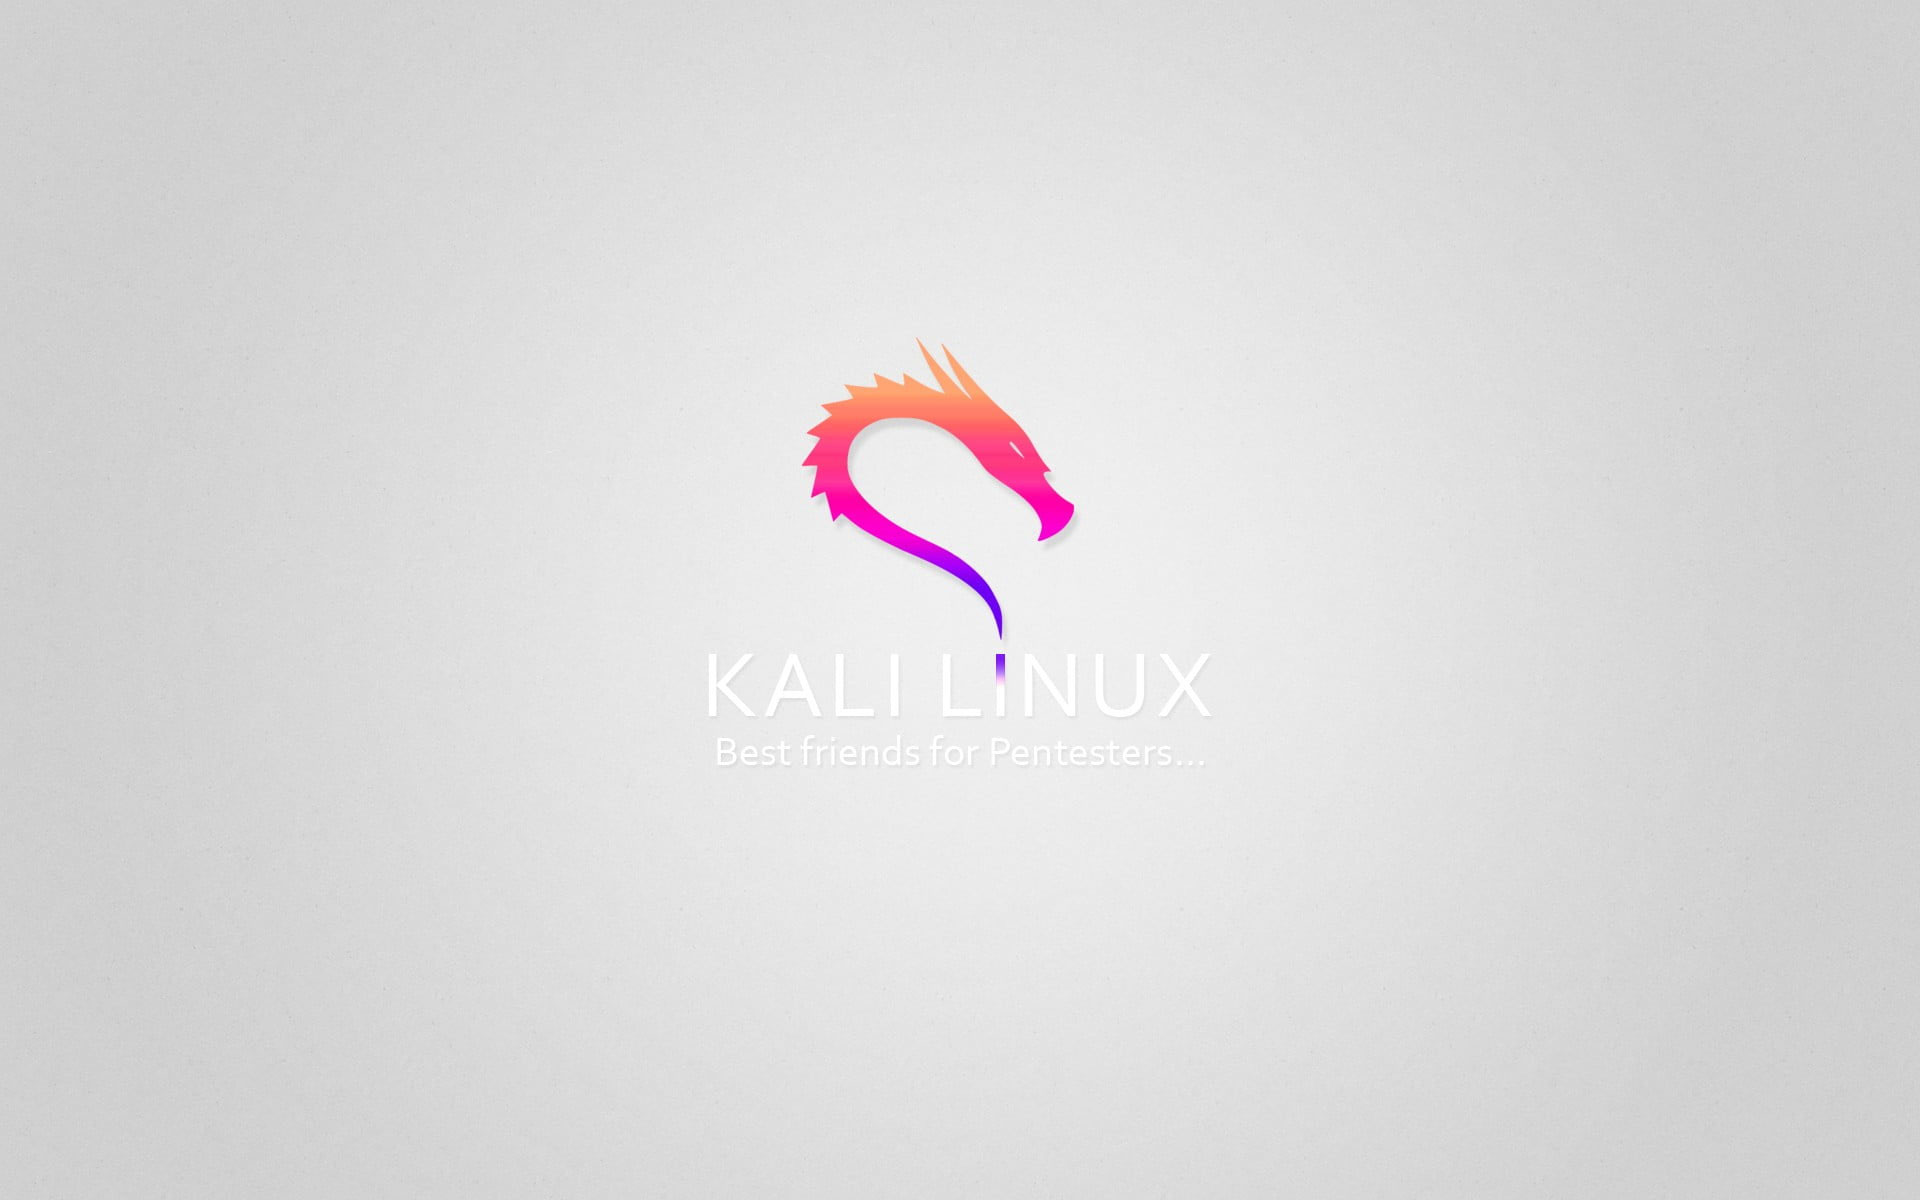 Wallpaper Kali Linux, Computer, Simple, Typography, Logo - Wallpaperforu